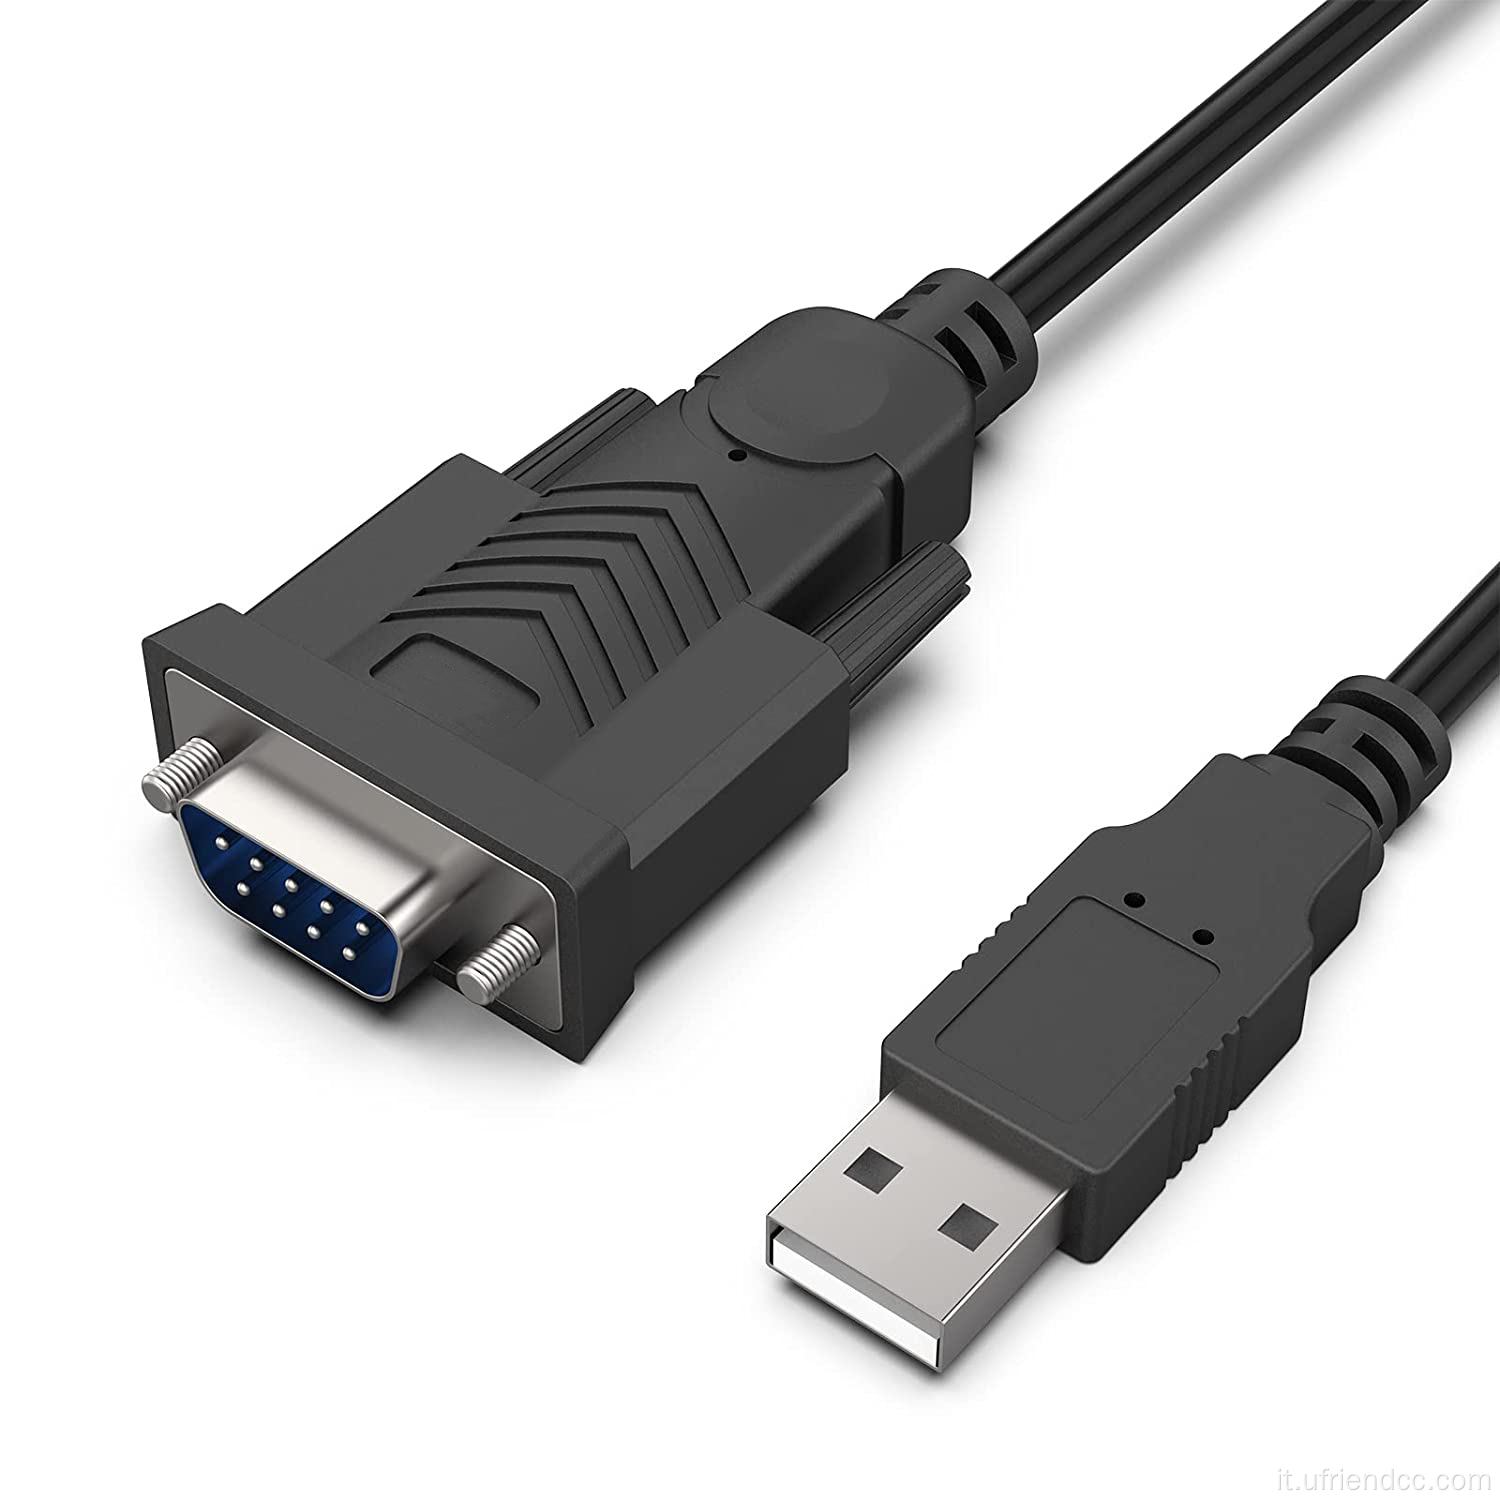 Adattatore USB/seriale USB al chipset del cavo seriale RS-232